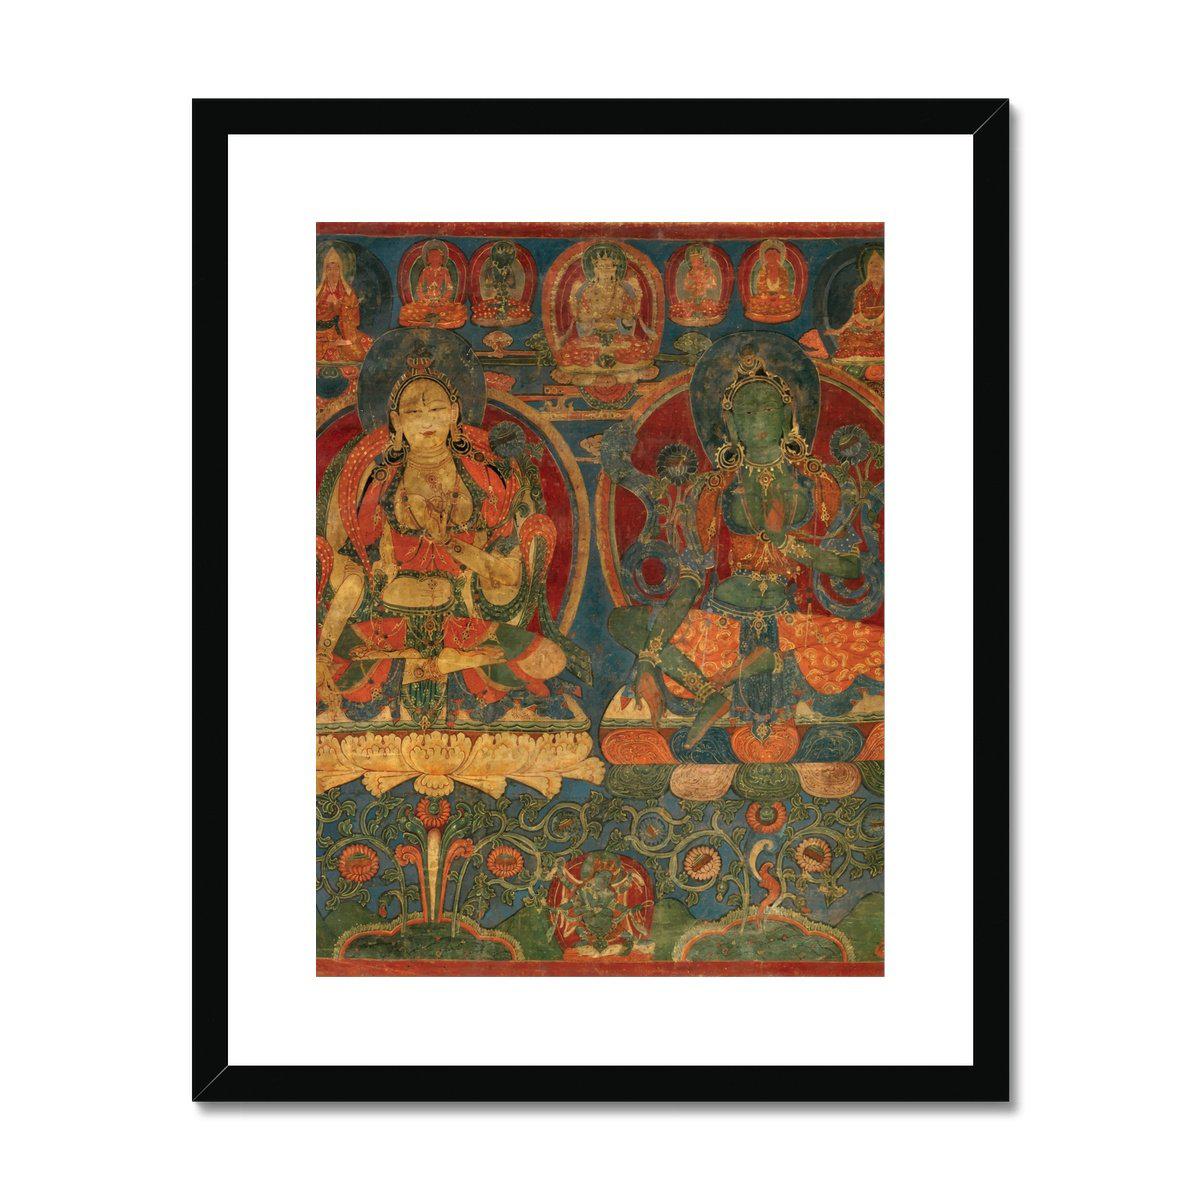 Framed Print 6"x8" / Black Frame Green Tara White Tara Tibetan Buddhist Thangka Tantra Hindu Vedic Antique Nepal Vintage Yantra Mandala Framed Art Print